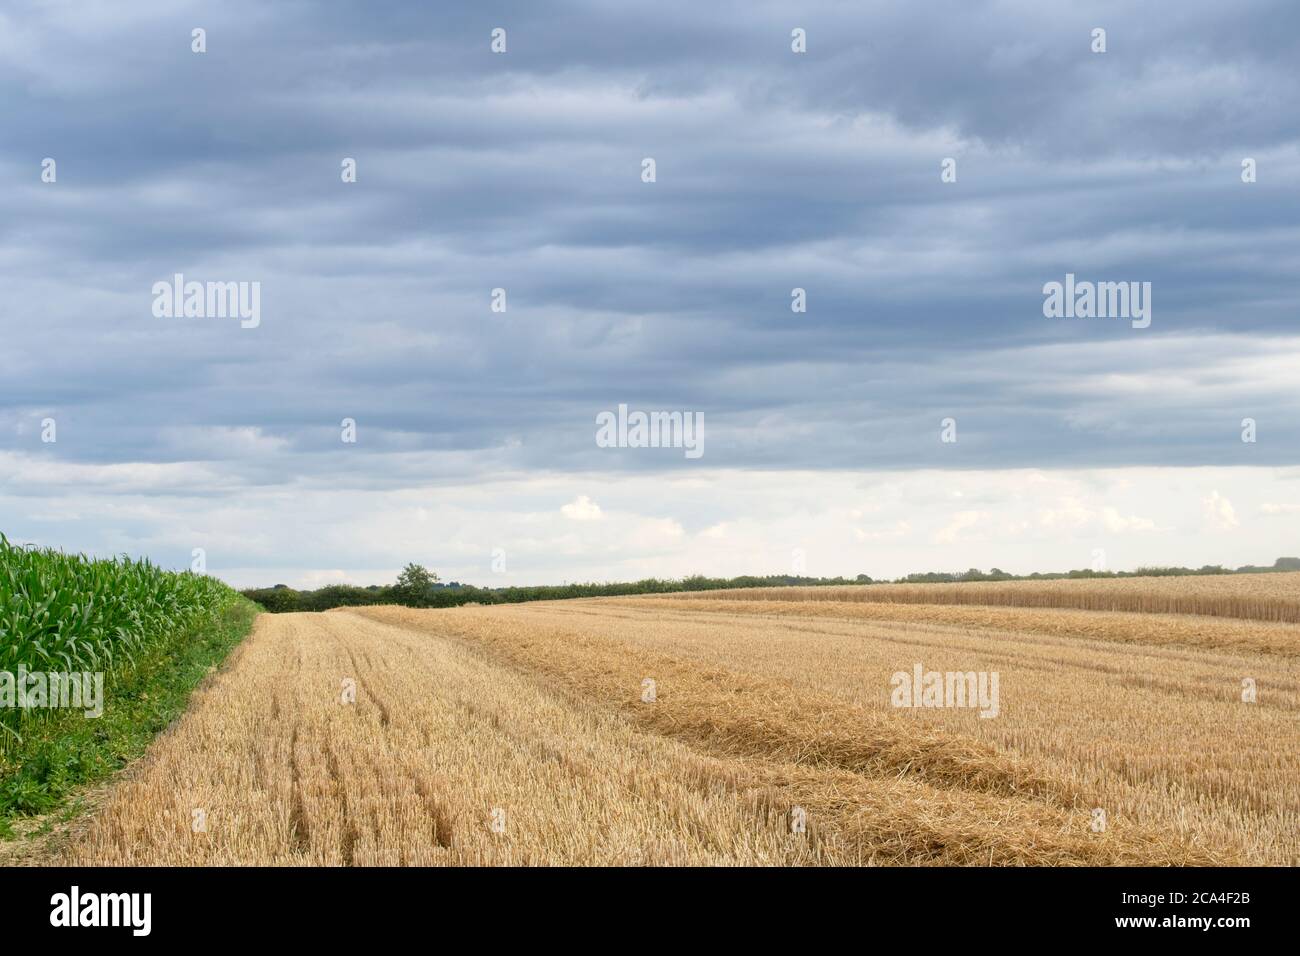 Corn crop growing alongside stubble of cereal crop Blue cloudy sky Landscape format Stock Photo